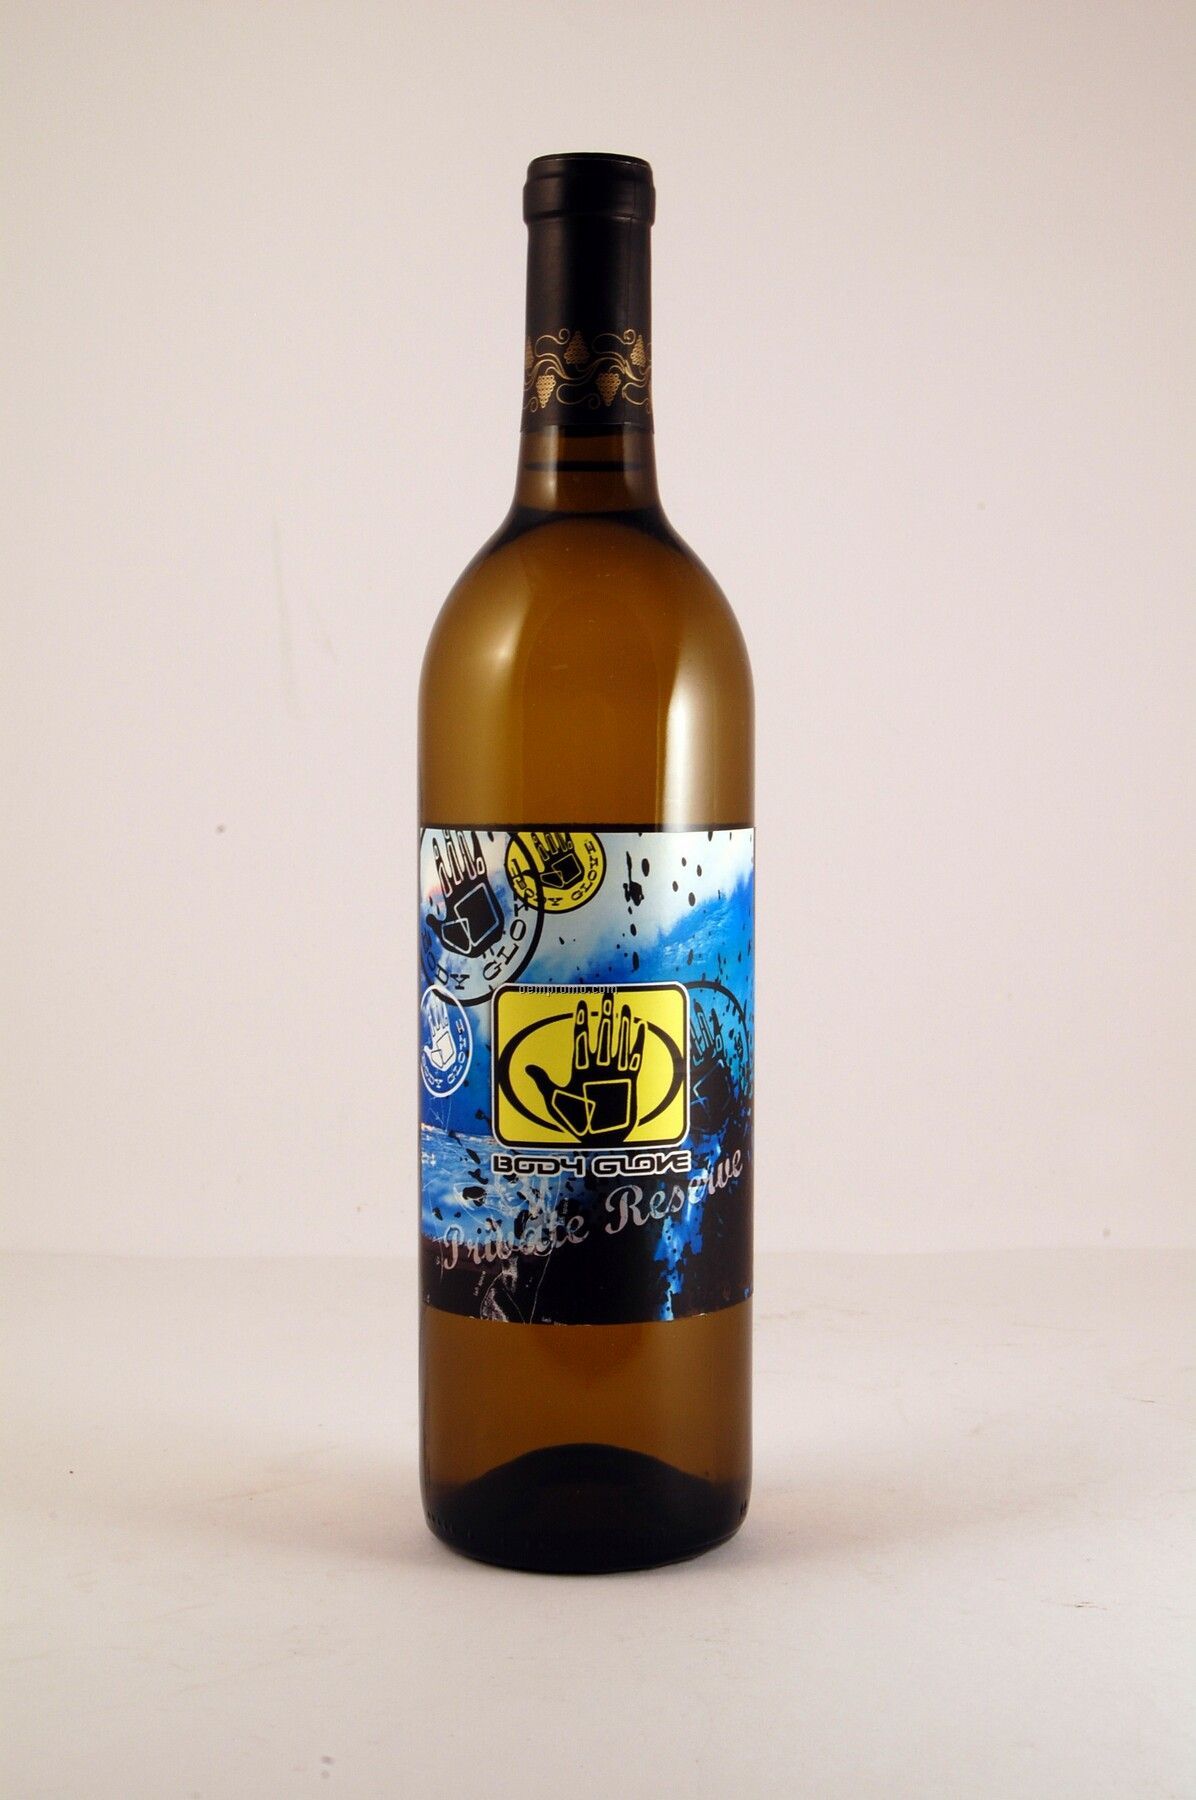 2009 Wv Chardonnay, Sonoma County, Barrel Fermented (Custom Labeled Wine)